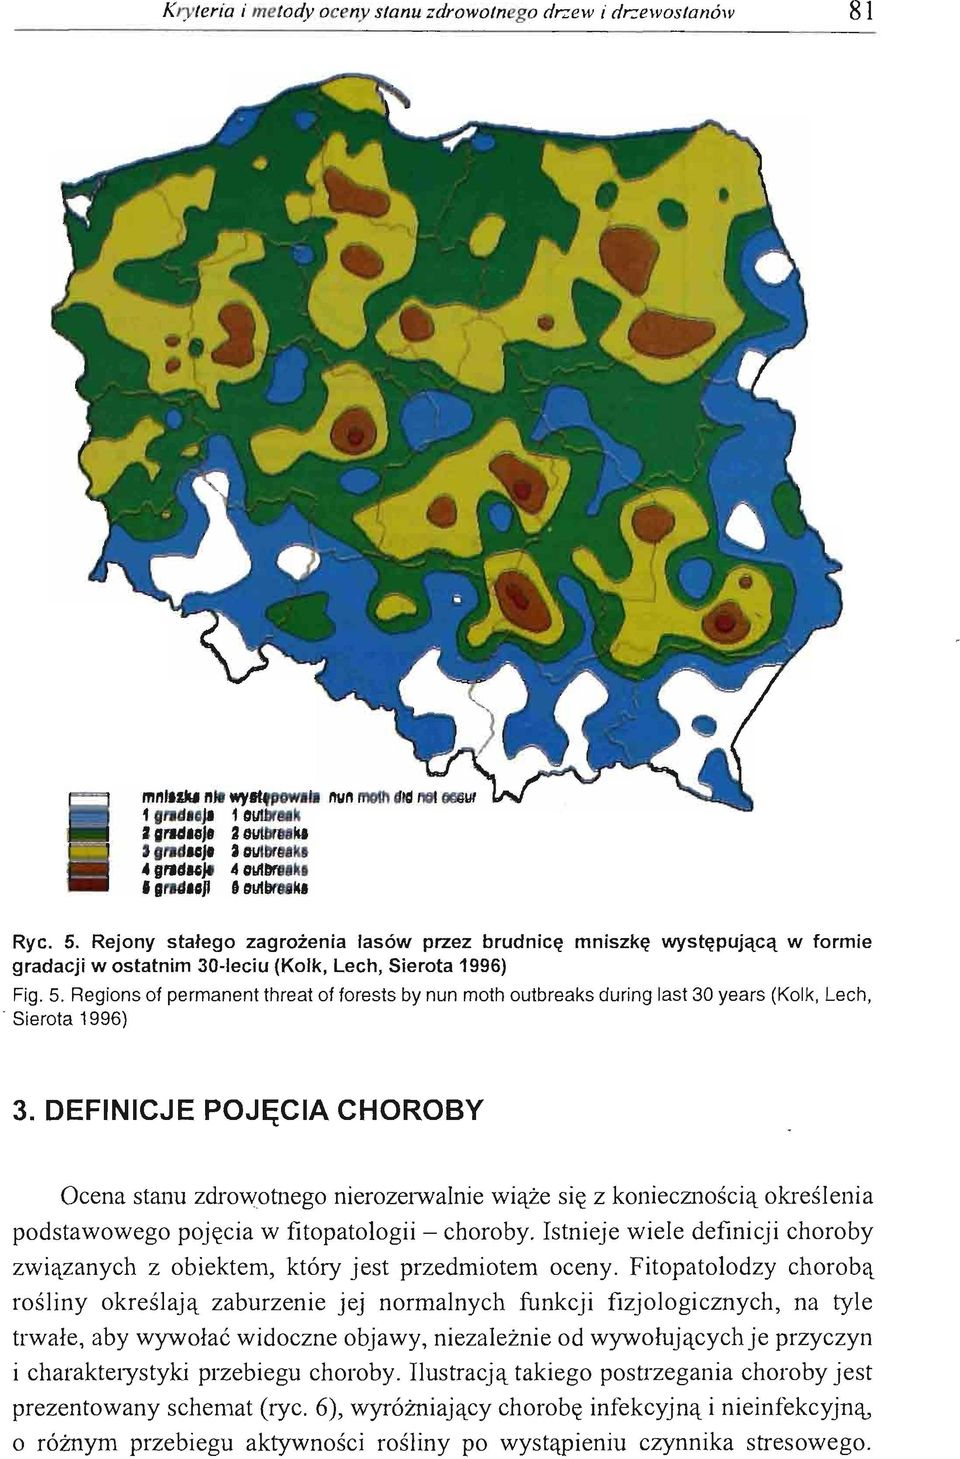 Regions ot permanent threat ot torests by nun moth outbreaks during last 30 years (Kolk, Lech,. Sierota 1996) 3.